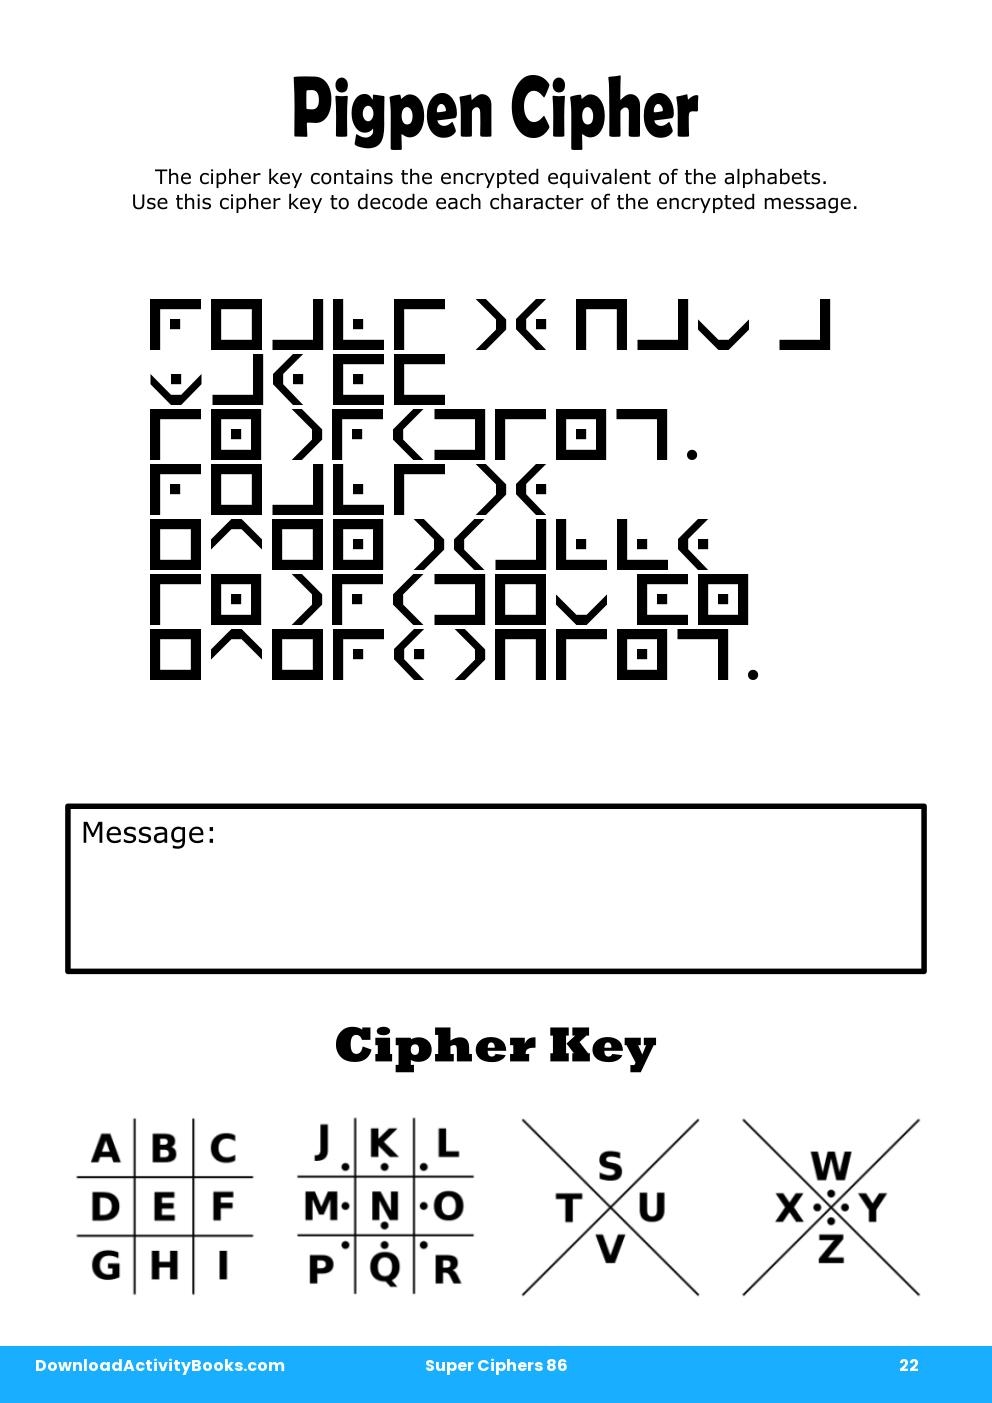 Pigpen Cipher in Super Ciphers 86